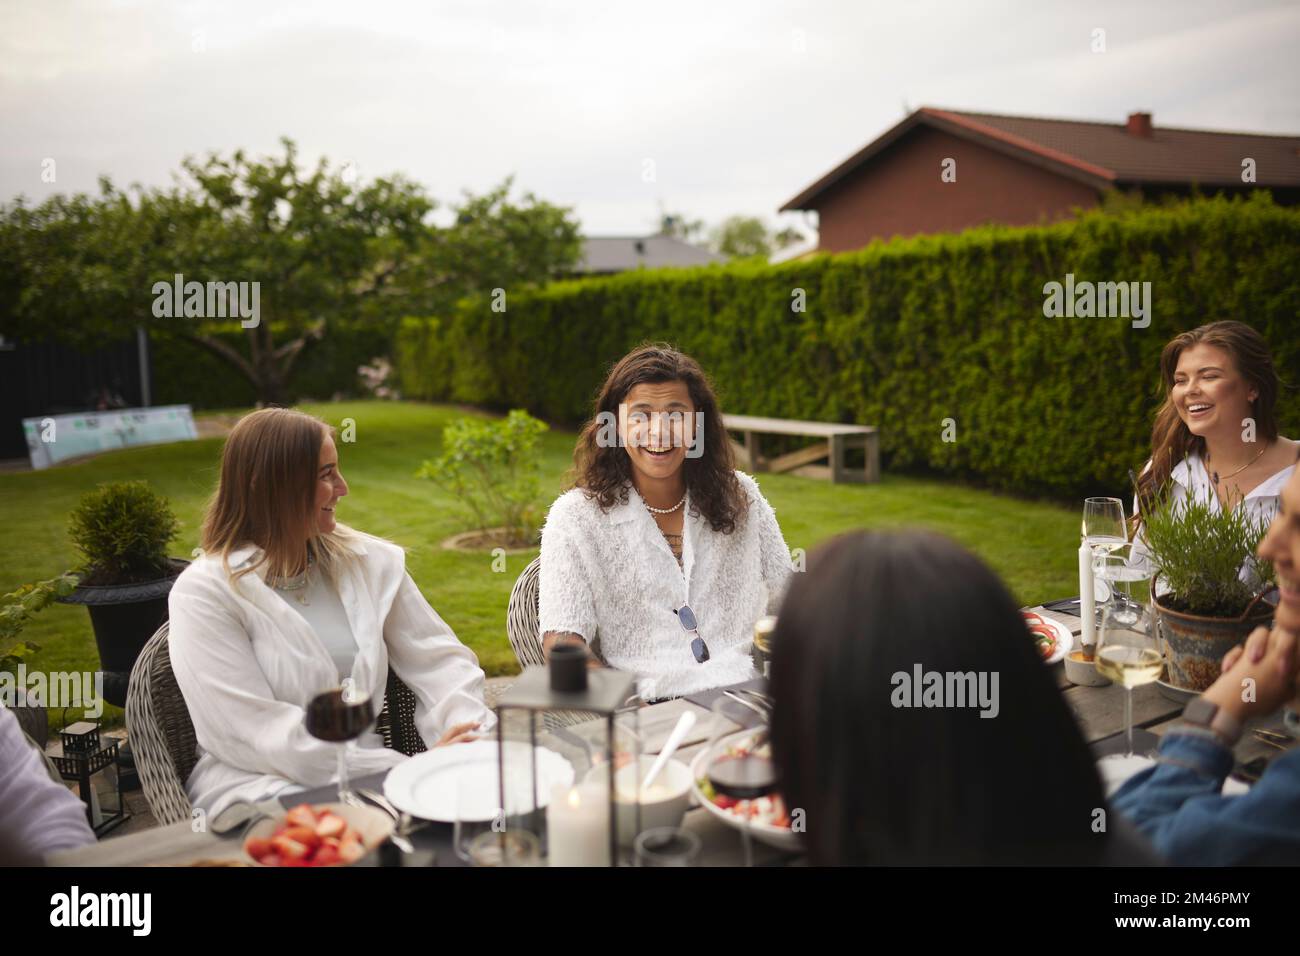 Friends having meal in garden Stock Photo